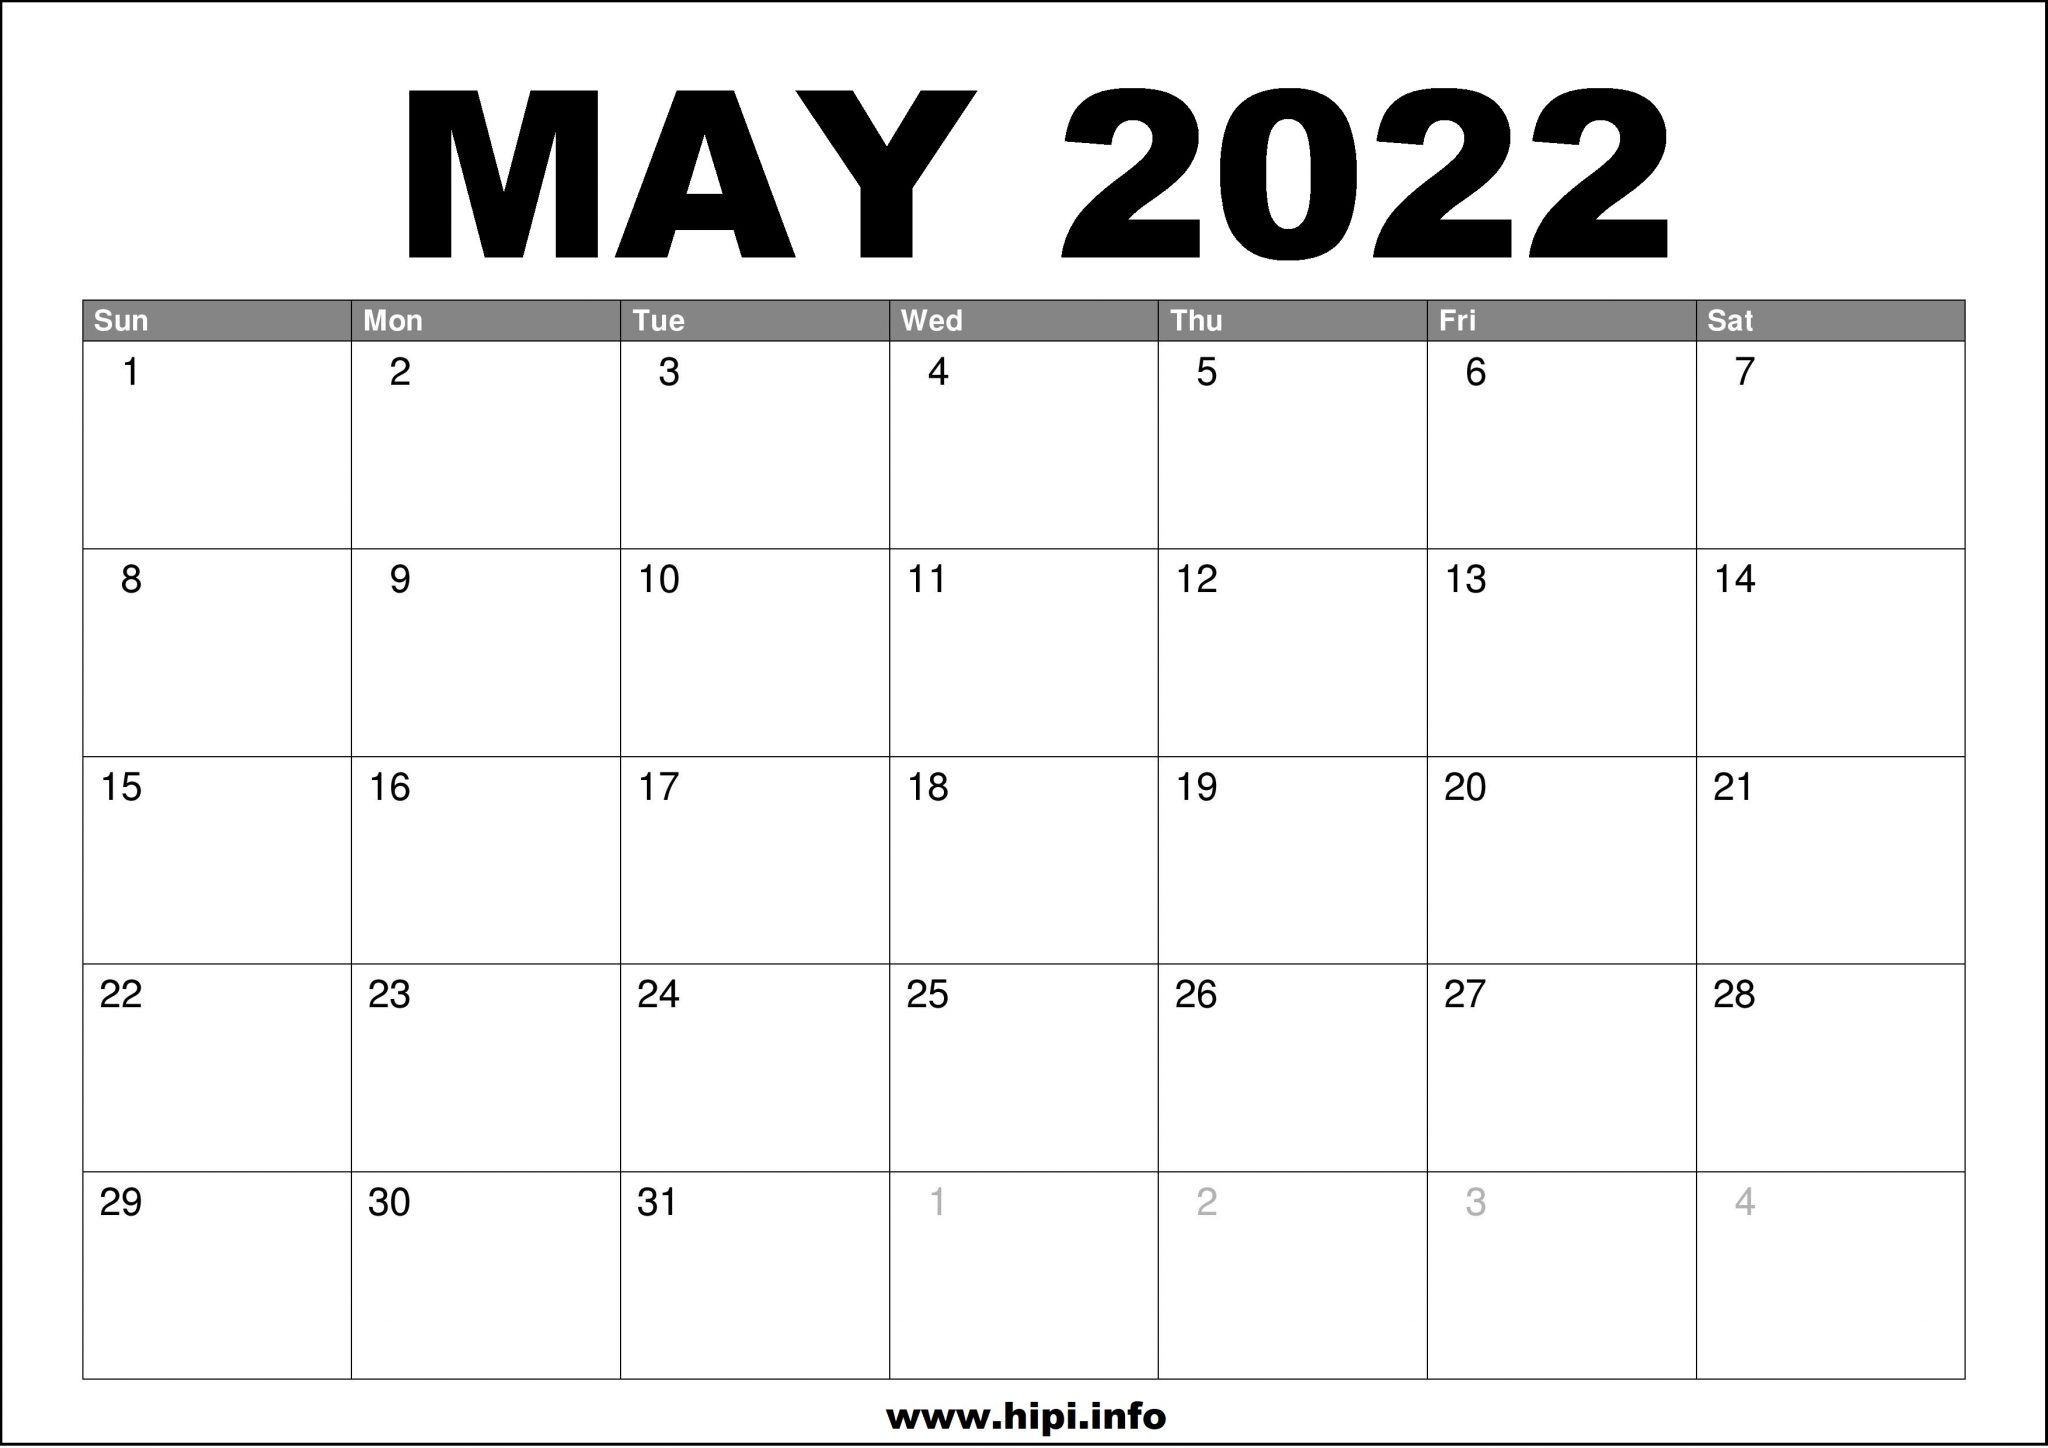 May 2022 Calendar Printable Free - Hipi | Calendars